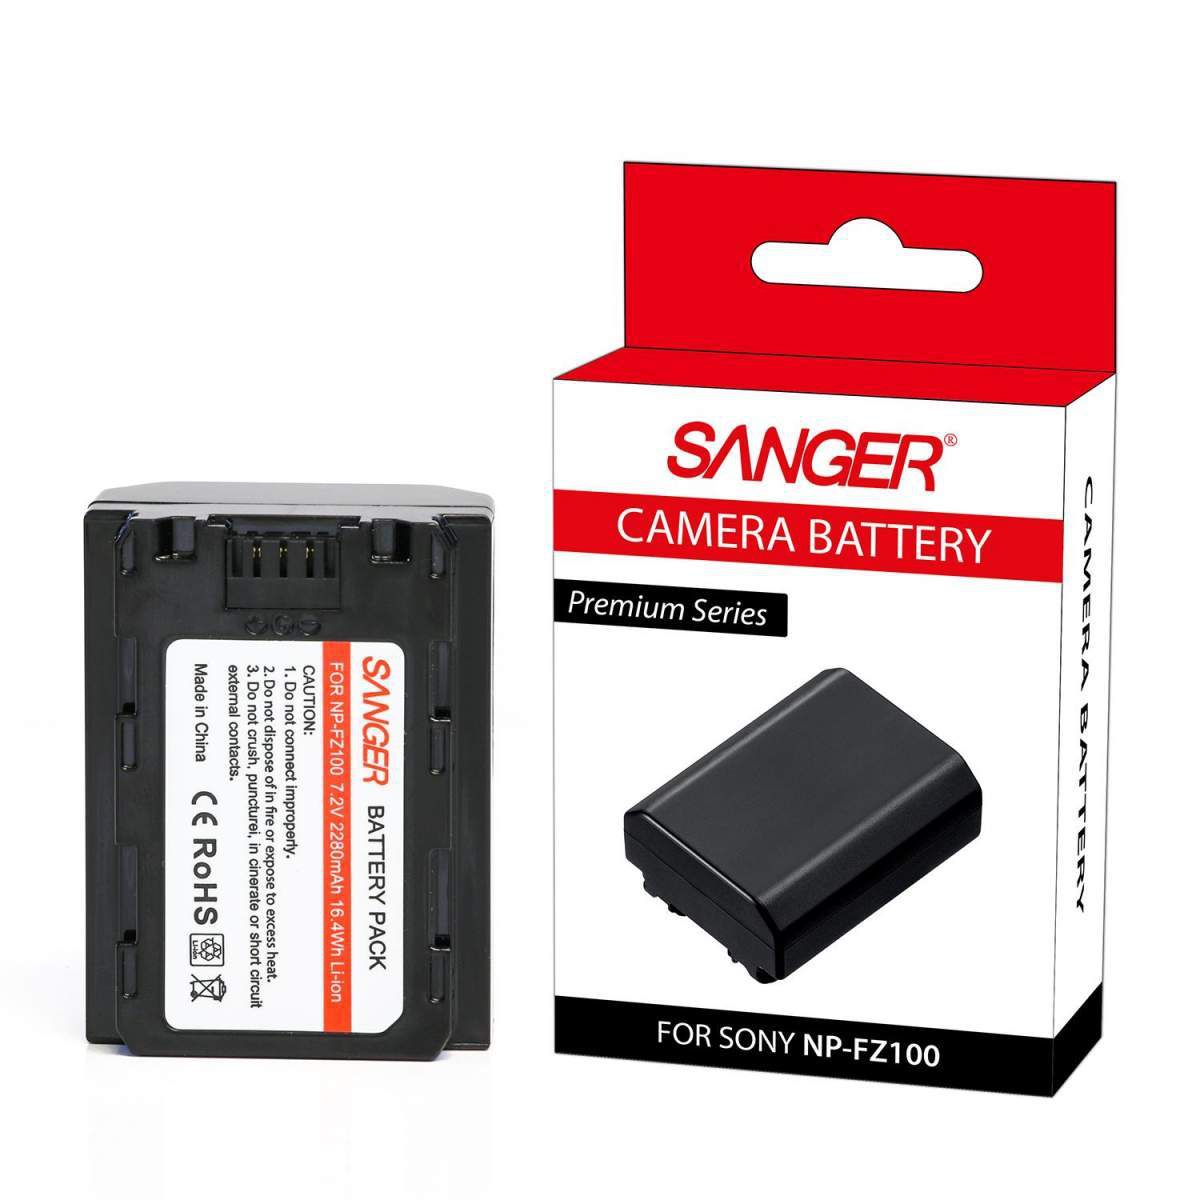 Sony A9 Batarya Sanger NP-FZ100